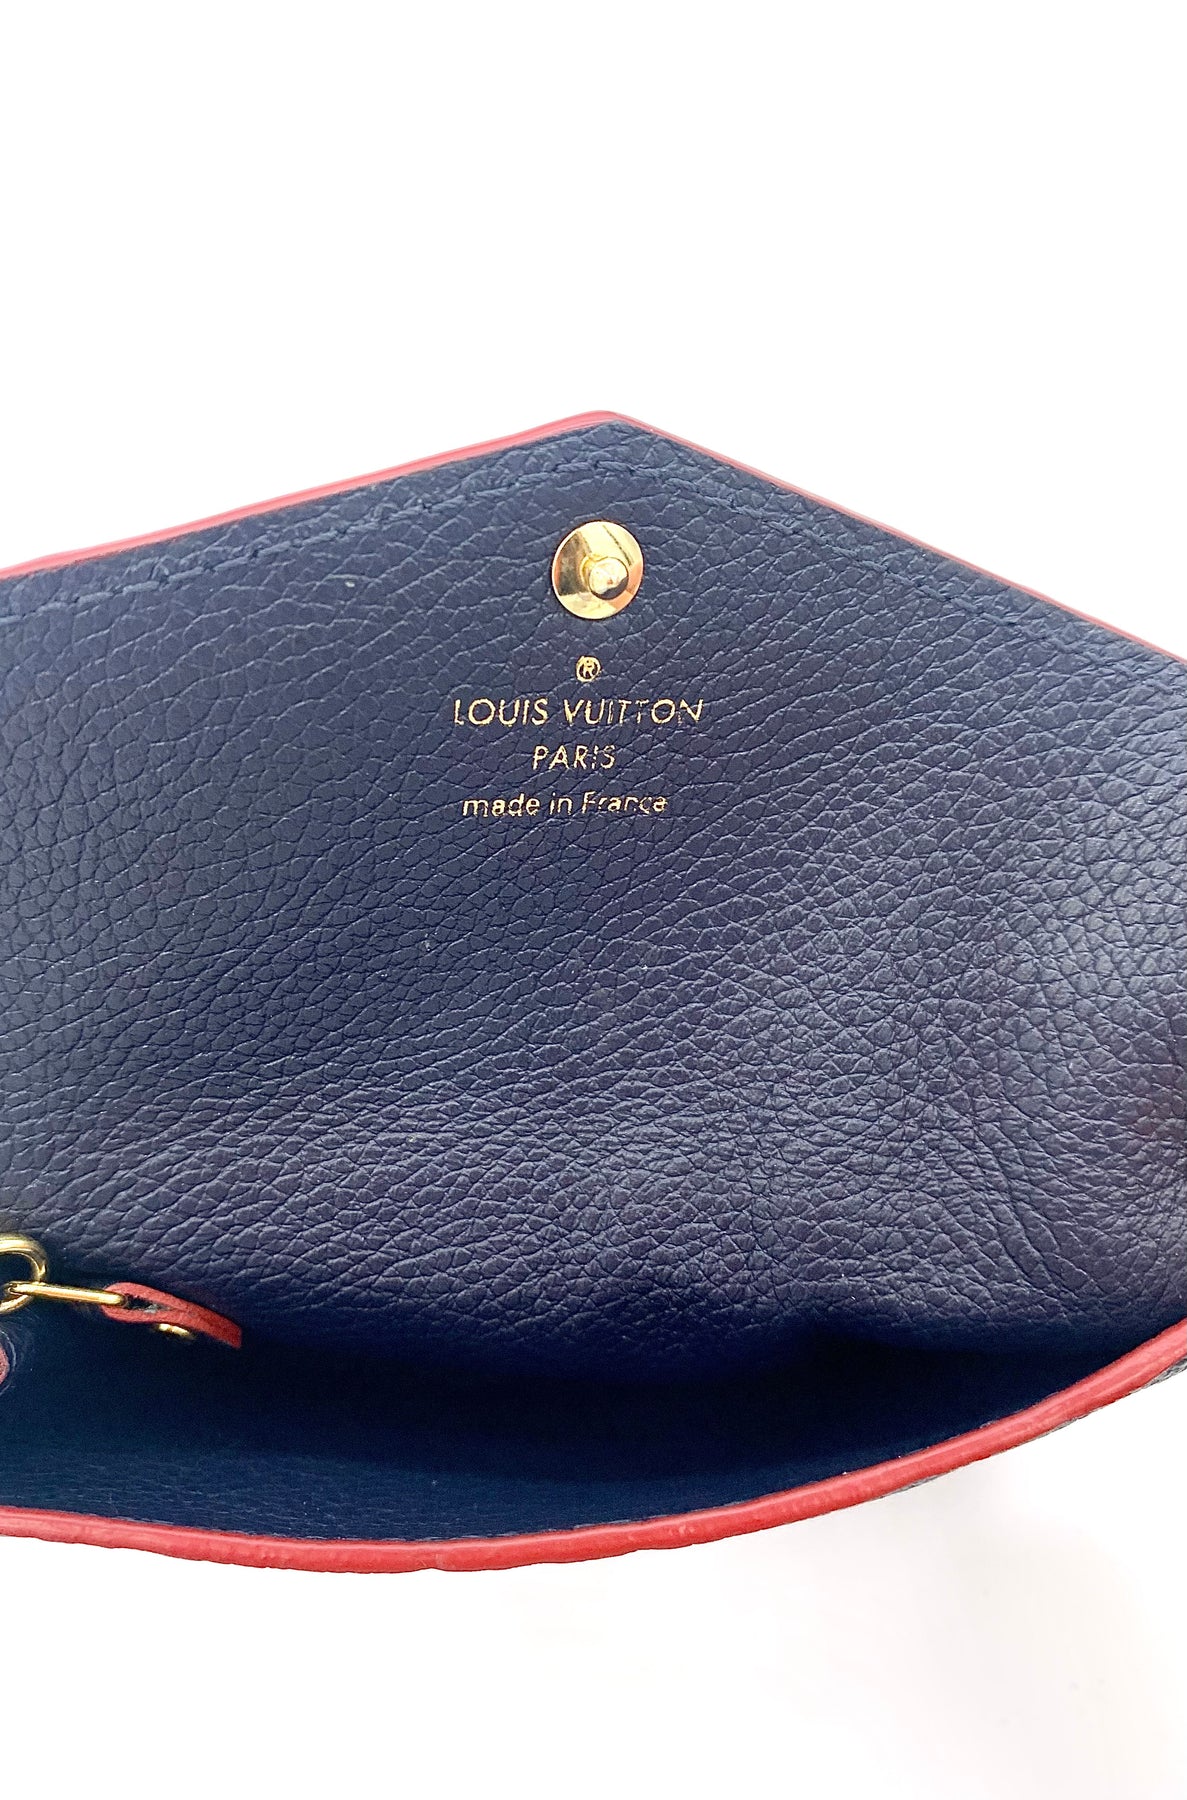 Louis Vuitton Empreinte Pochette Cle Coin Case Navy Key Ring w/Storage Bag  Boxed